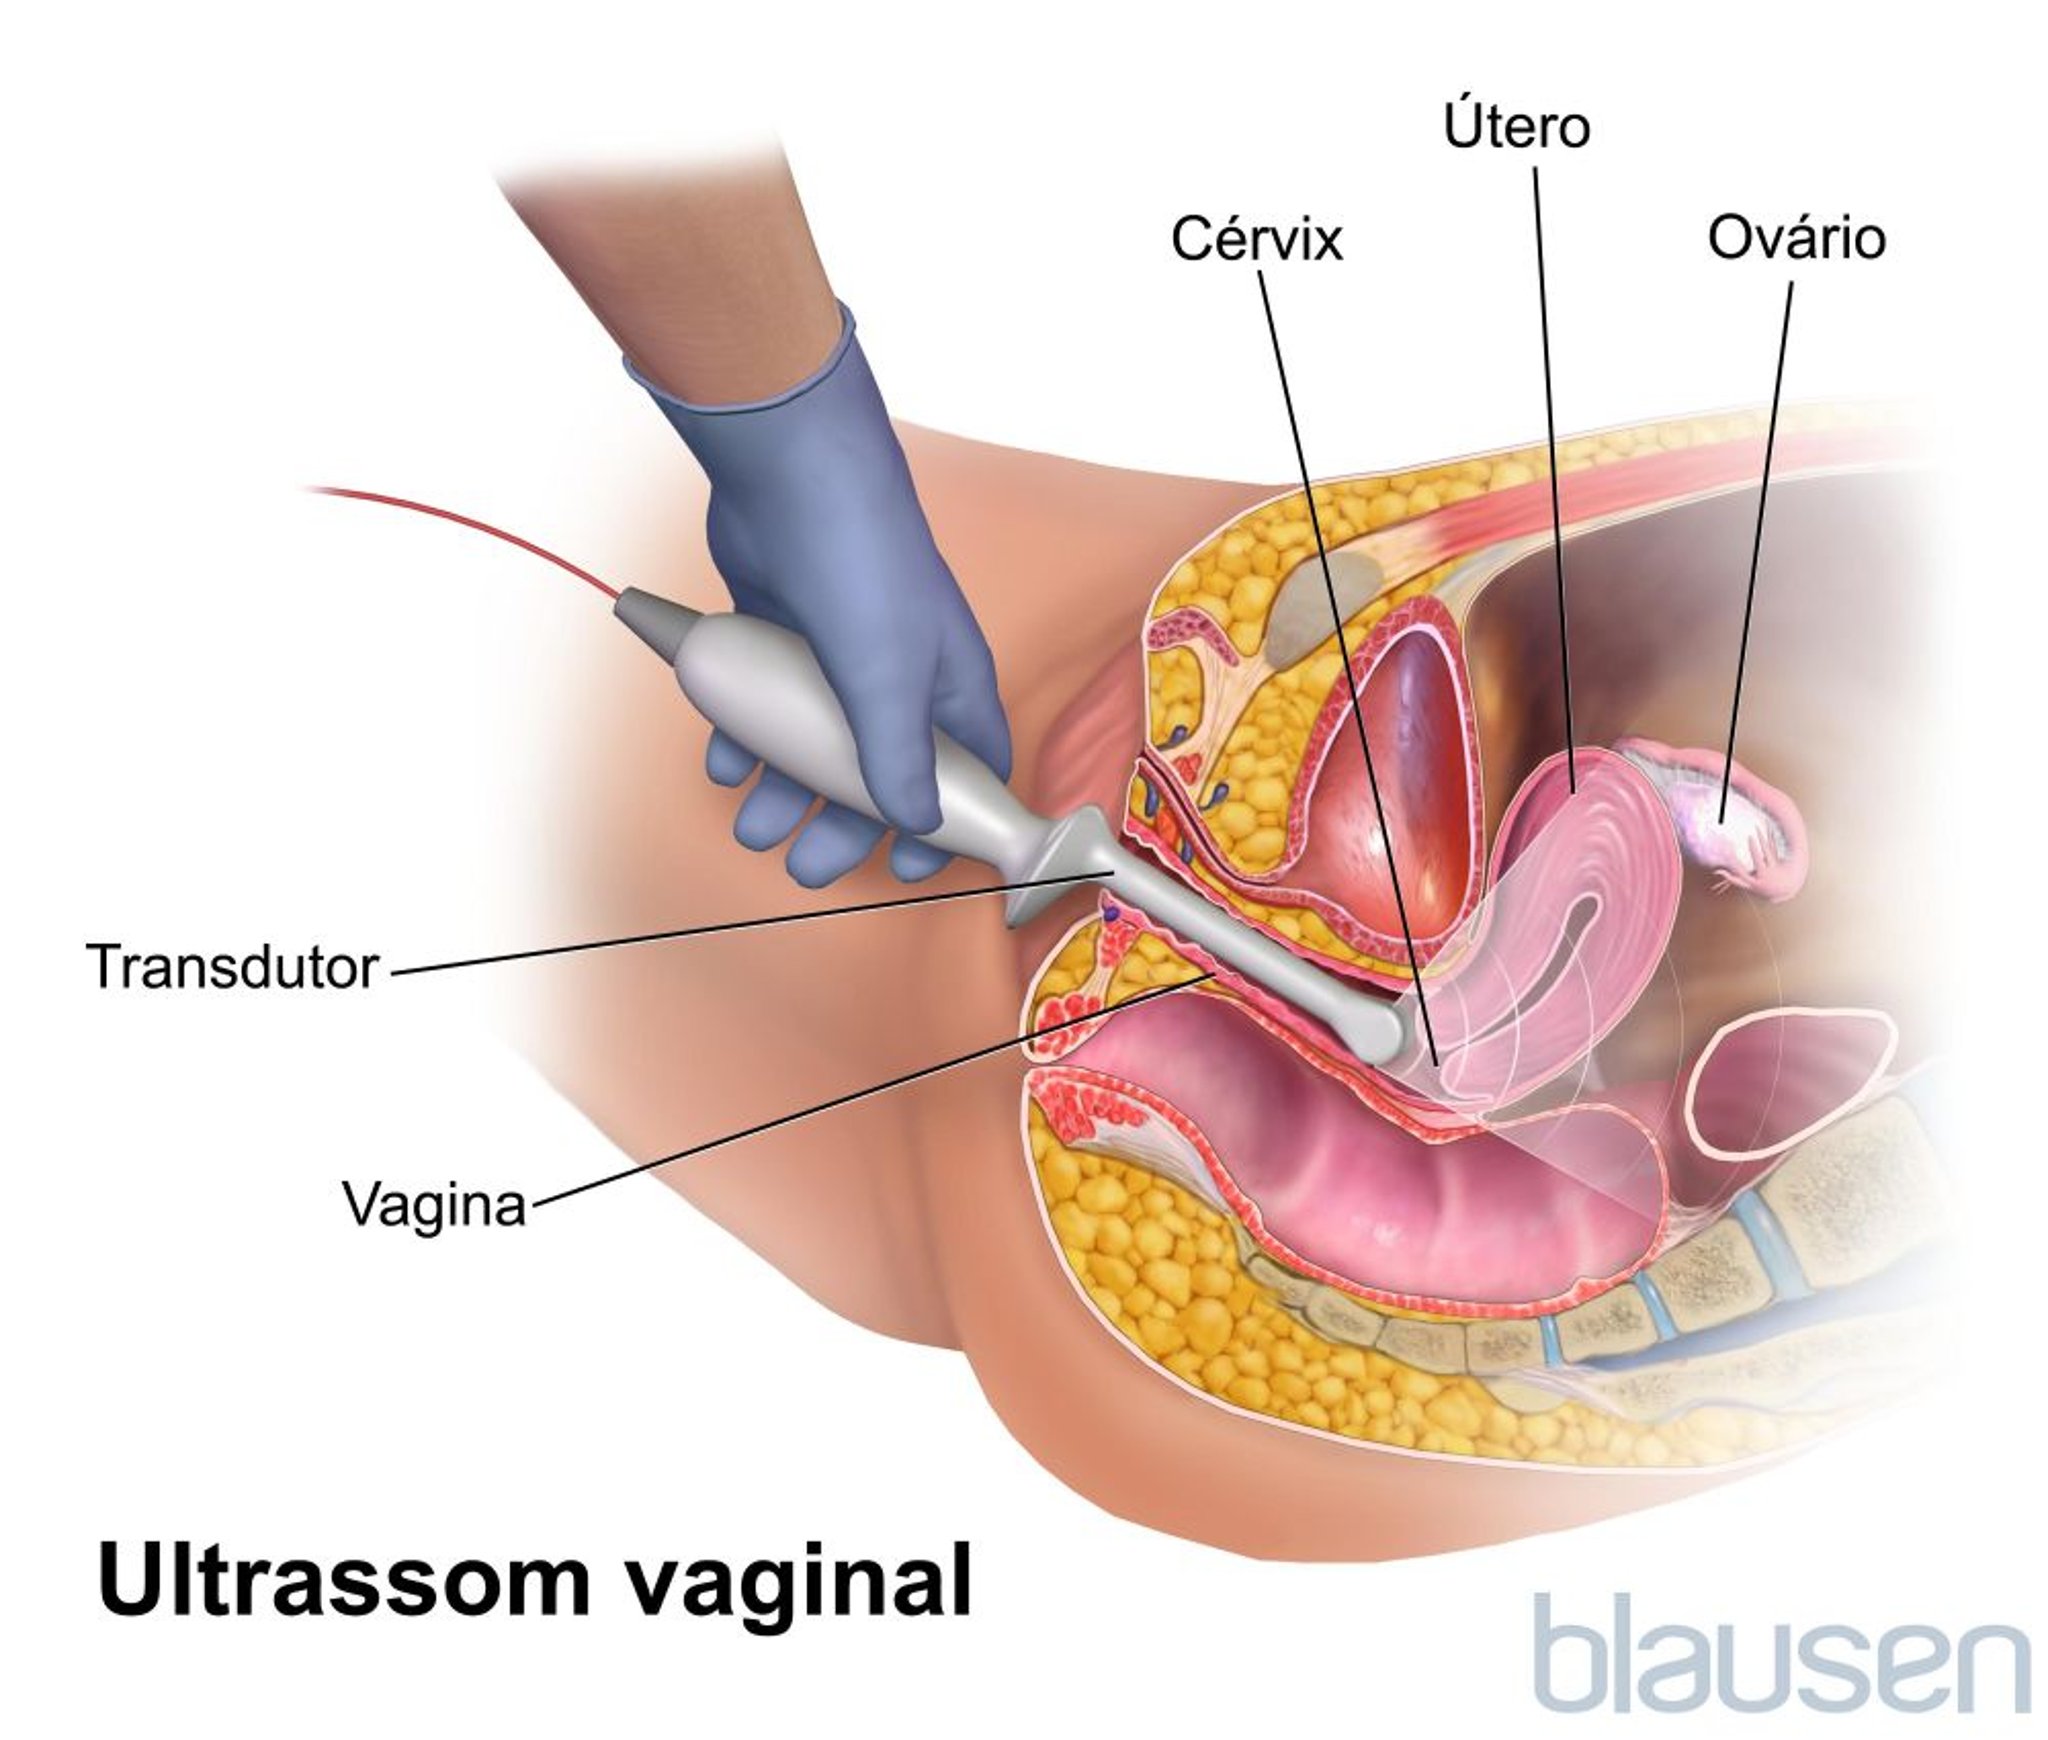 Ultrassonografia transvaginal